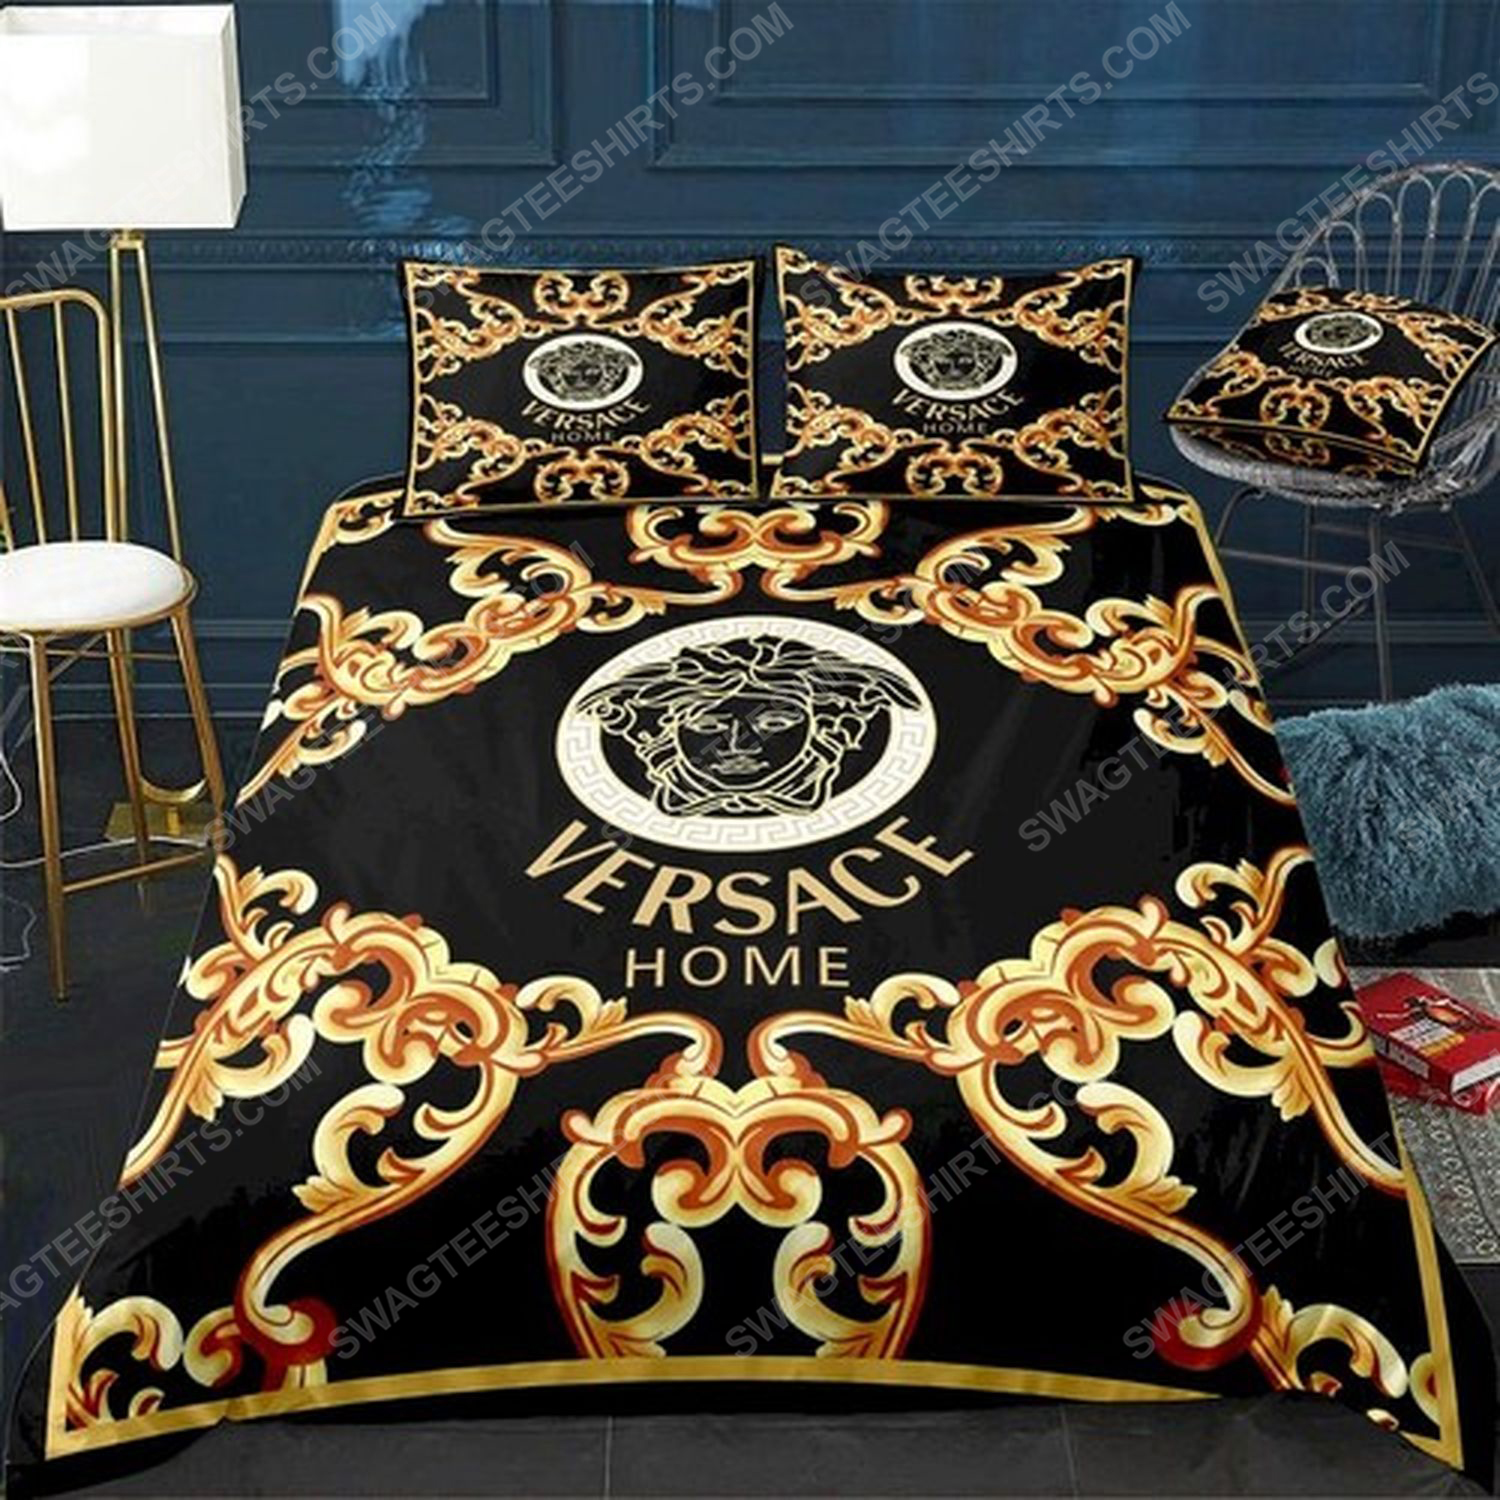 Versace home full print duvet cover bedding set 2 - Copy